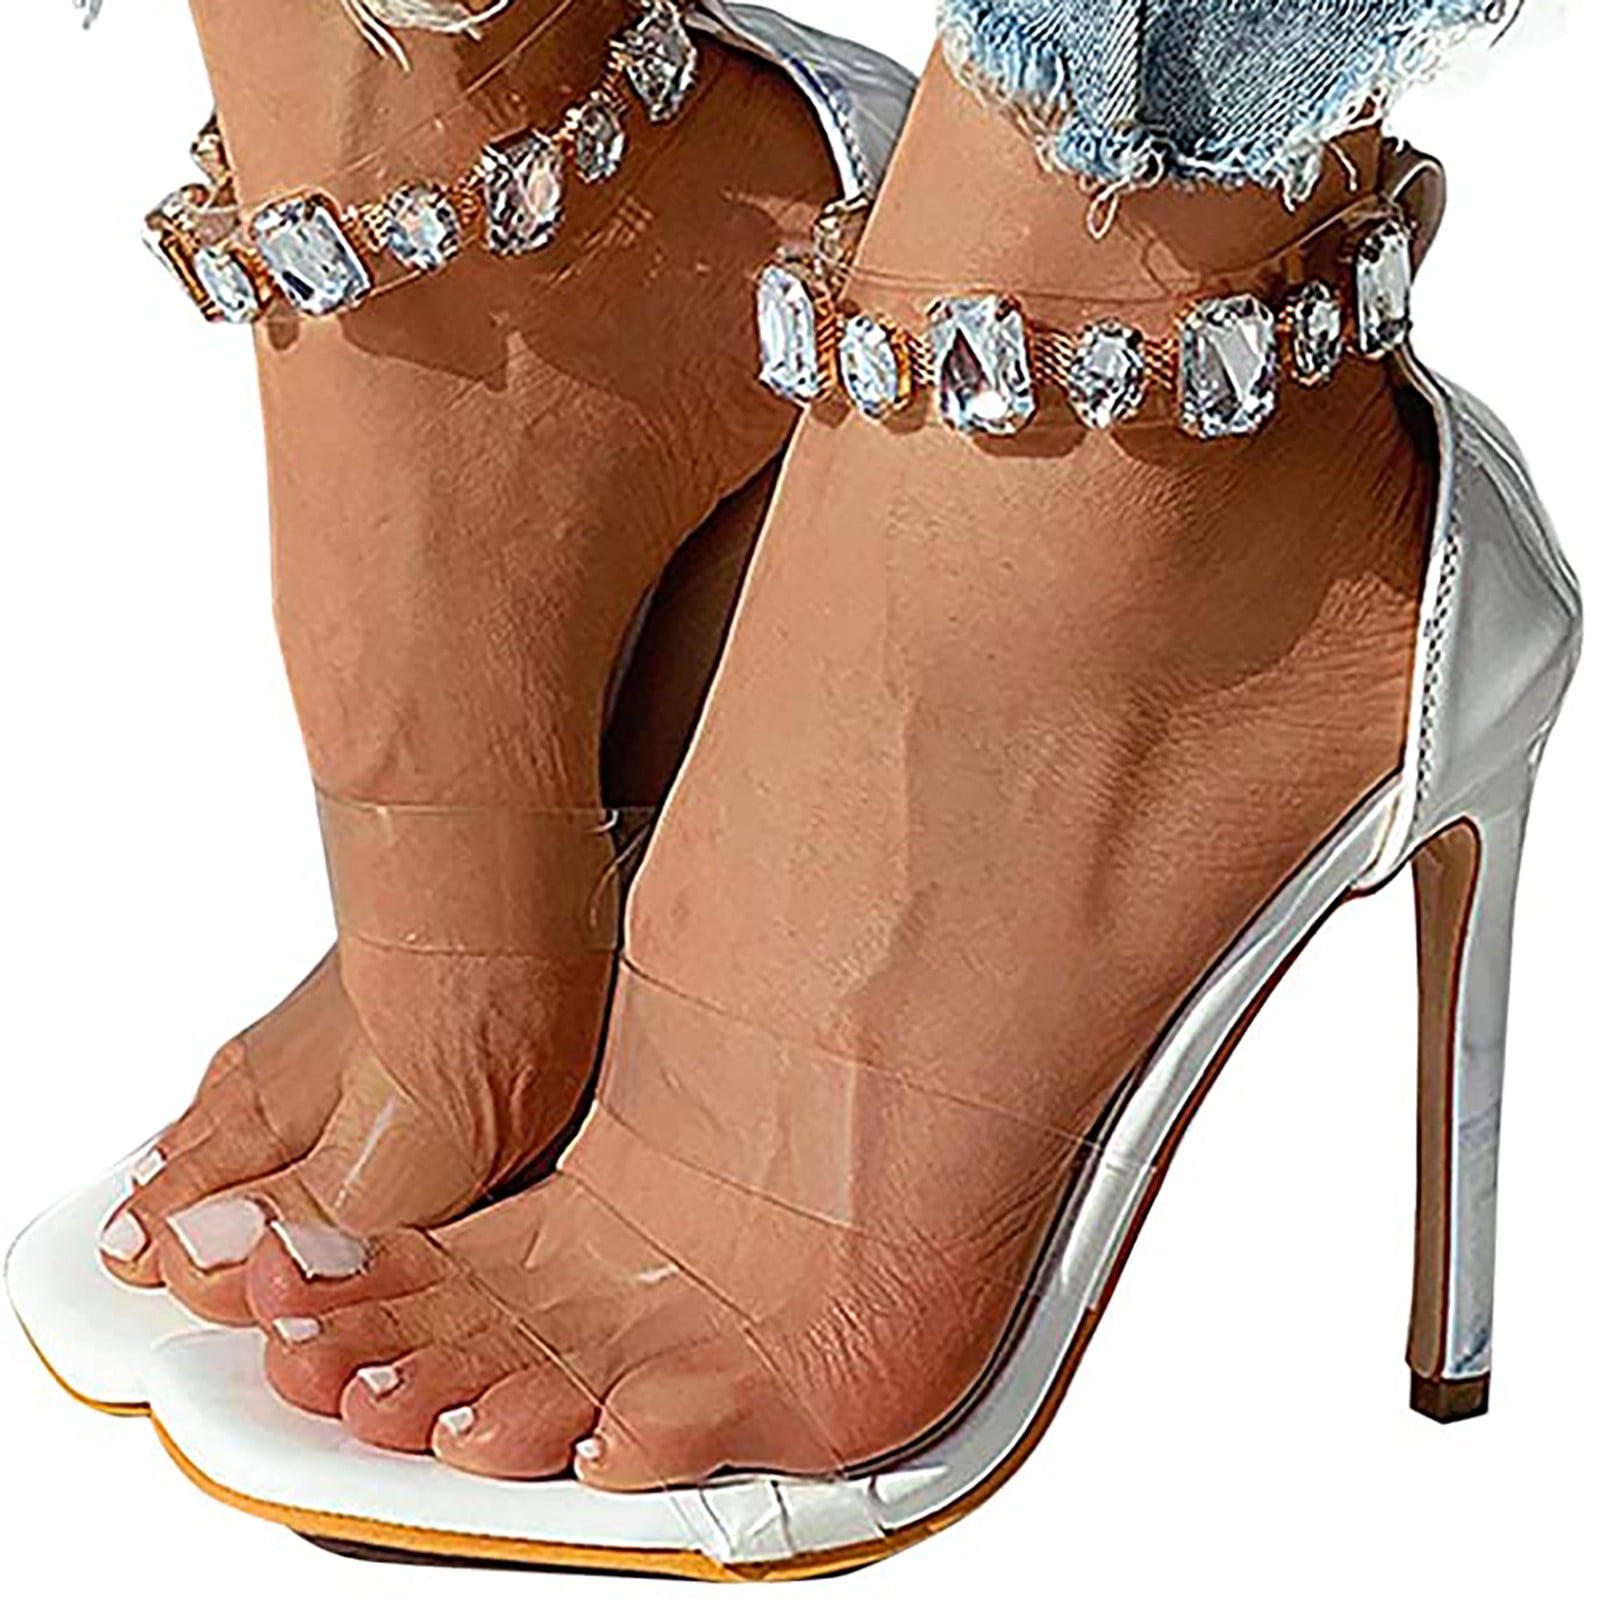 Apricot Fashion Casual Patchwork Fish Mouth Shoes | Transparent heels  sandals, Sandals heels, Transparent heels